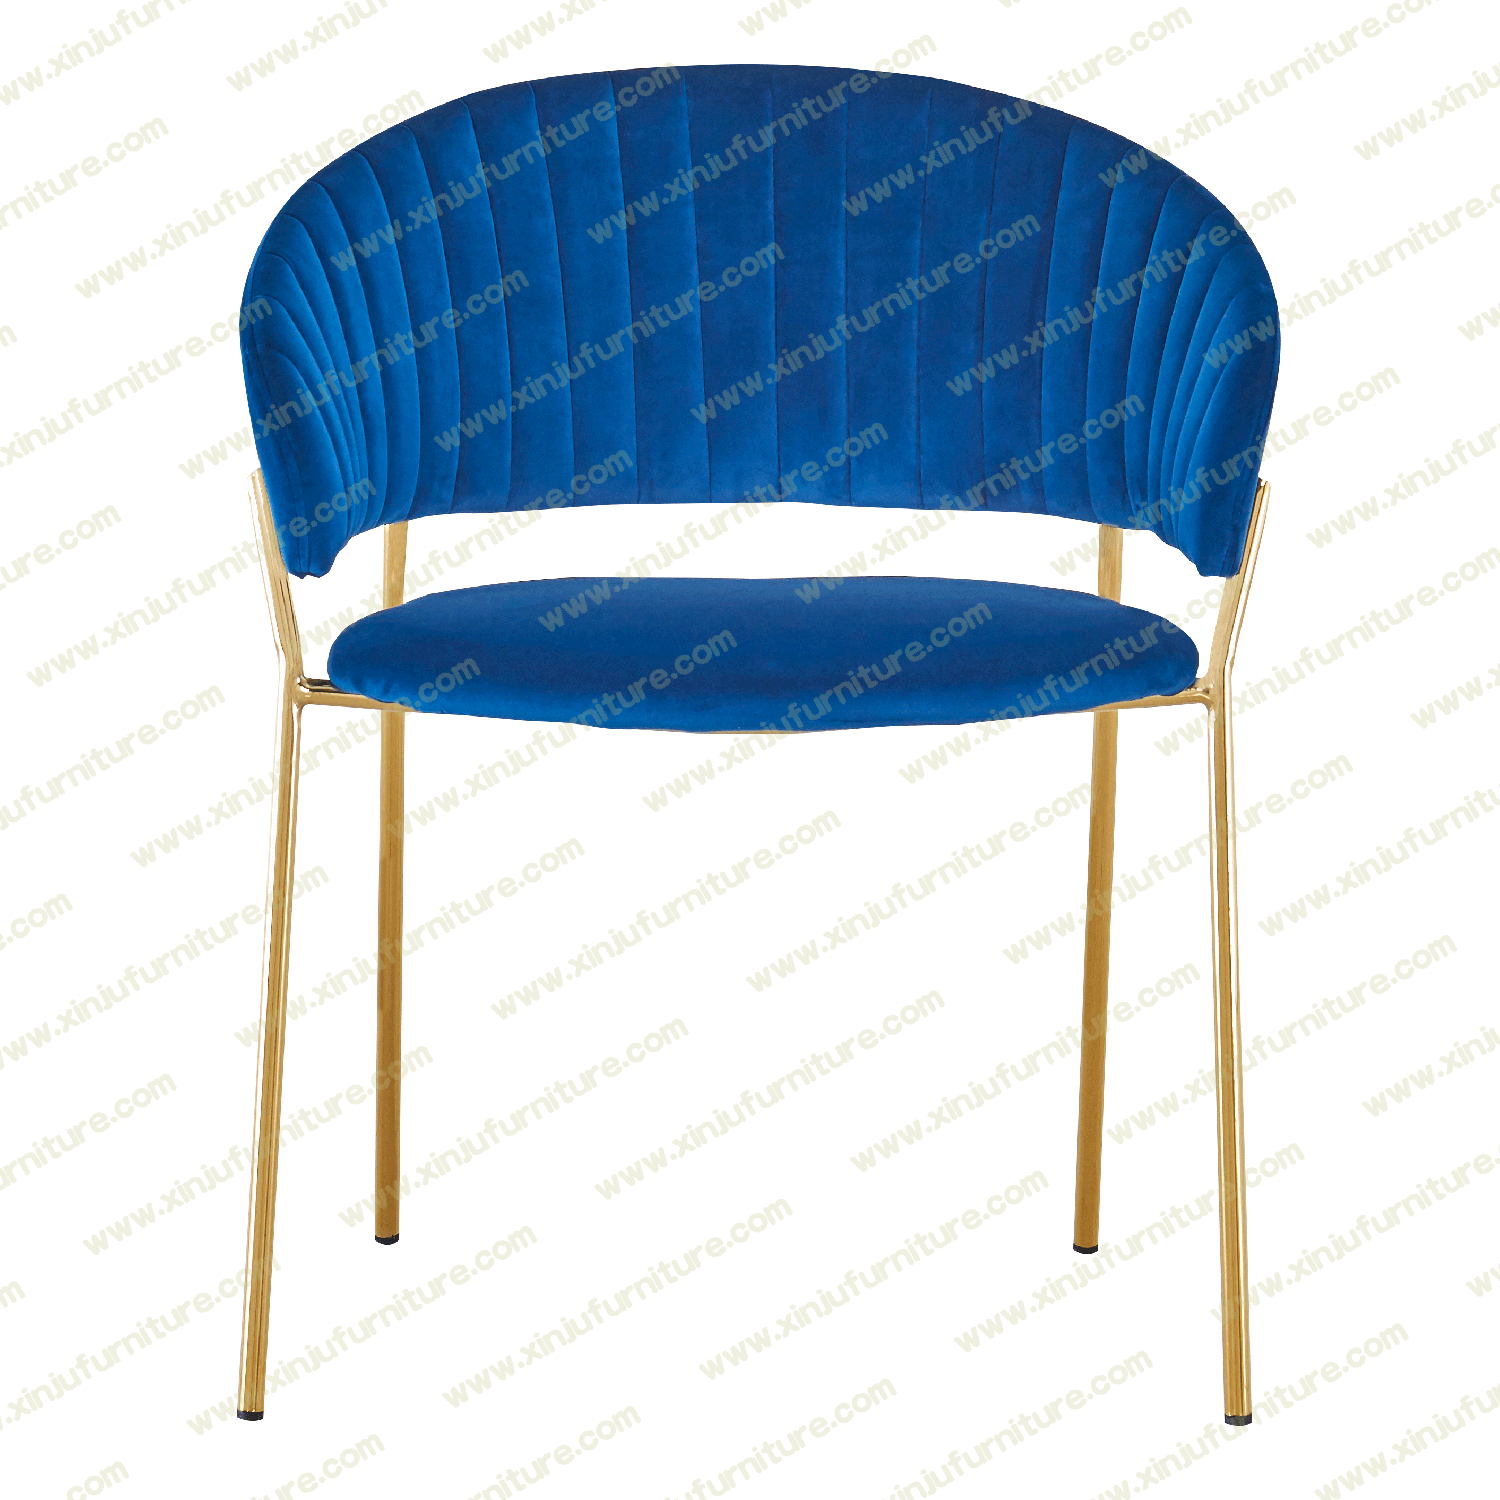 Simple modern dark blue dining chair